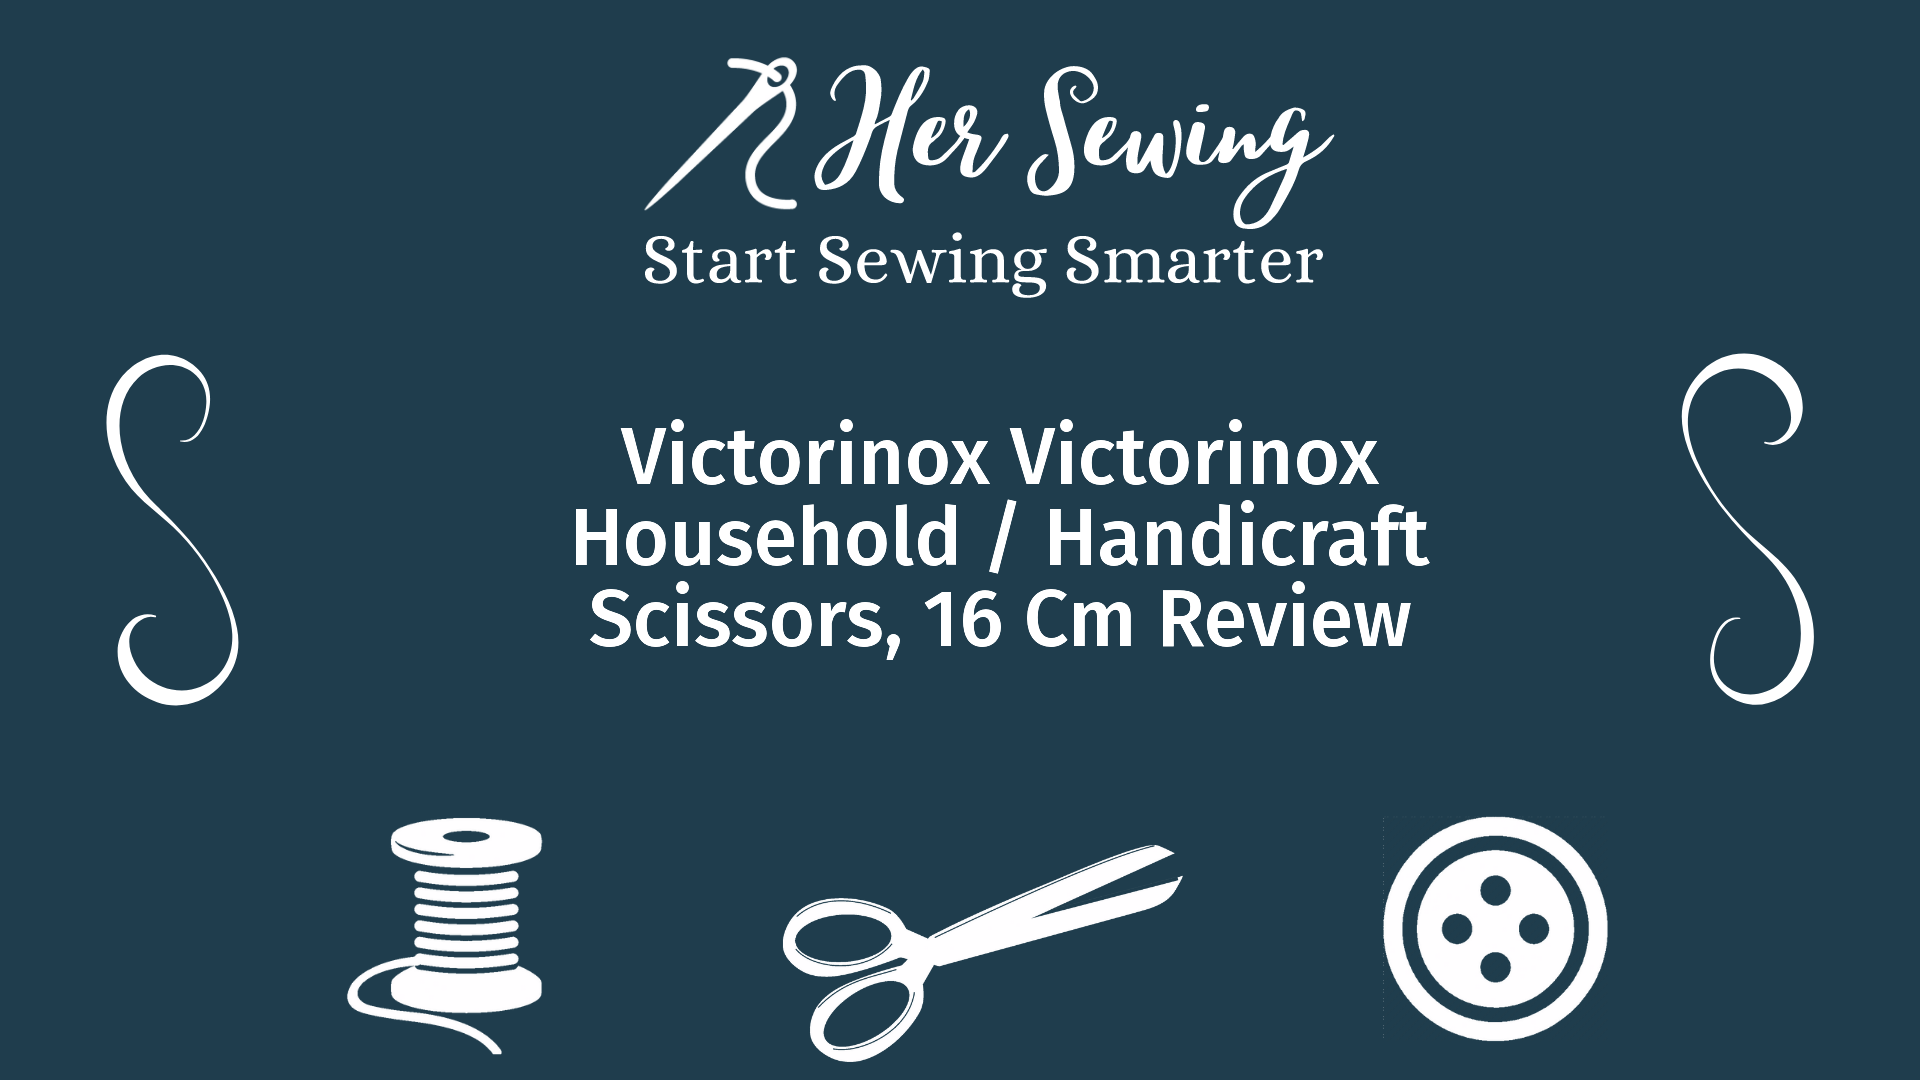 Victorinox Victorinox Household / Handicraft Scissors, 16 Cm Review